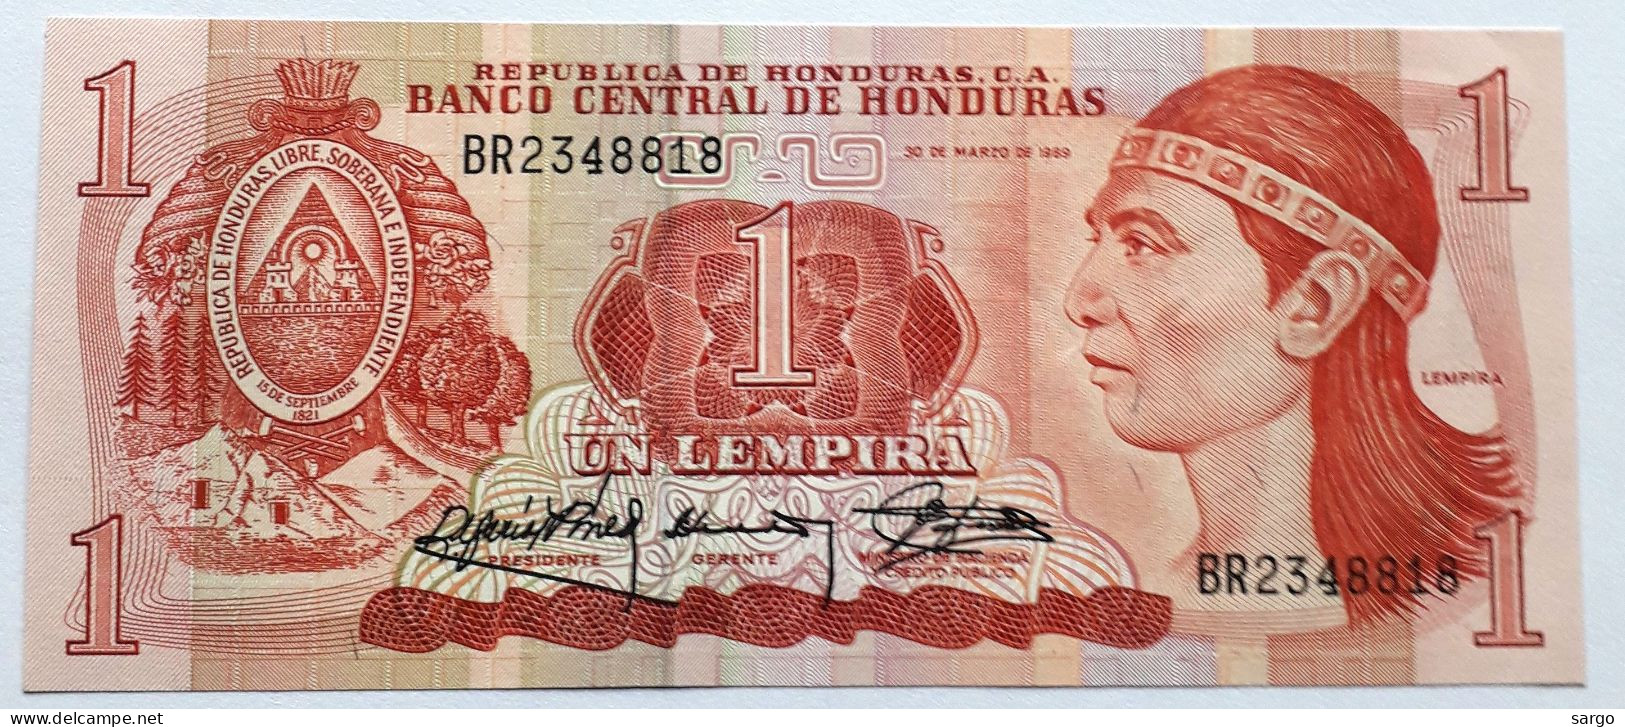 HONDURAS - 1 LEMPIRA - P 68 C (1989) - UNC - BANKNOTES - PAPER MONEY - CARTAMONETA - - Honduras